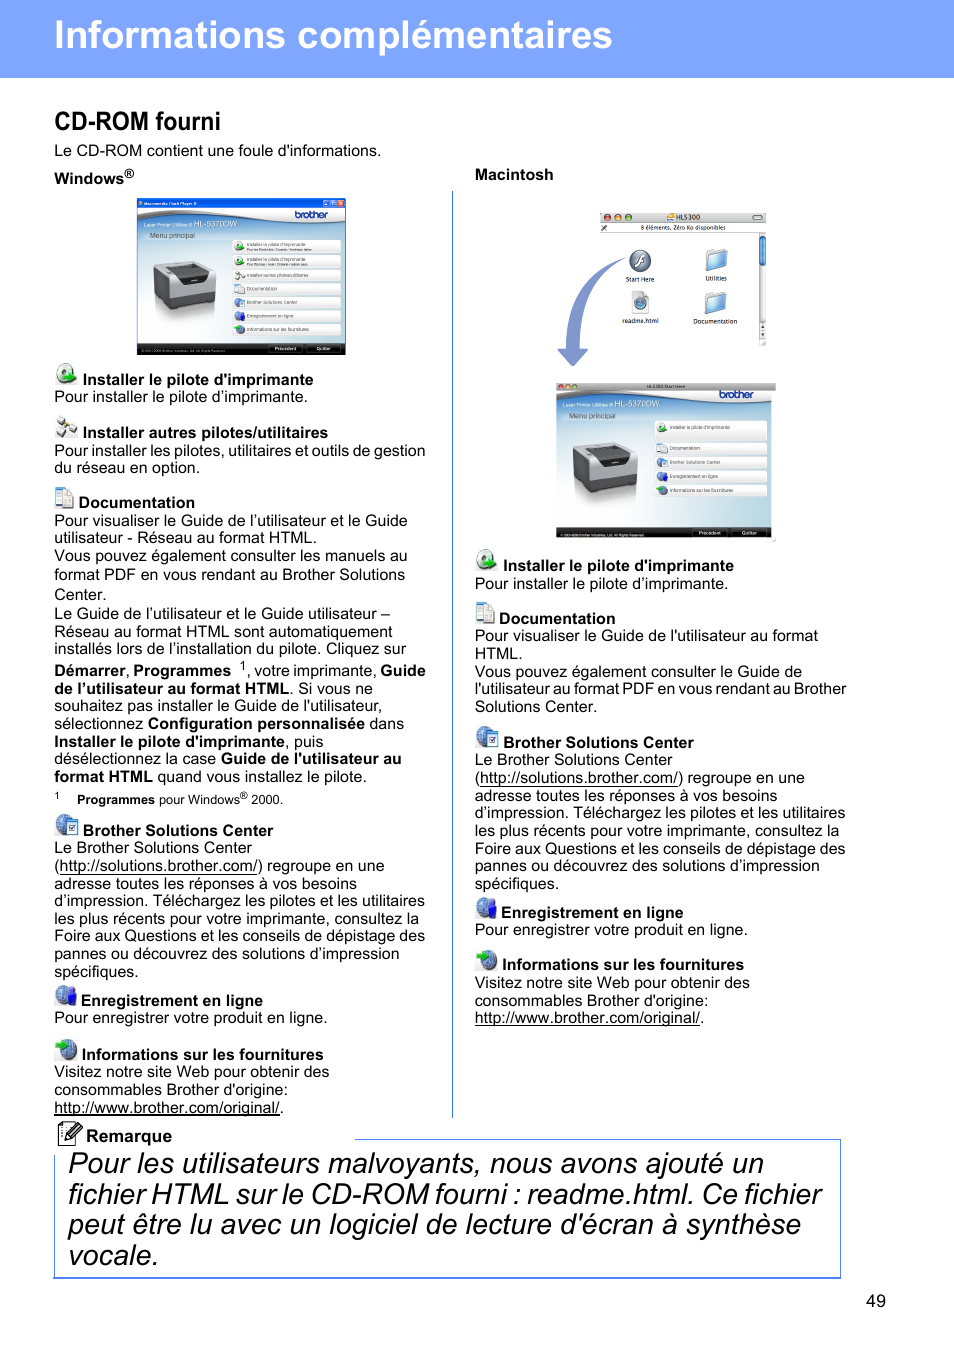 Cd-rom fourni, Windows, Macintosh | Informations complémentaires | Brother HL 5370DW Manuel d'utilisation | Page 49 / 54